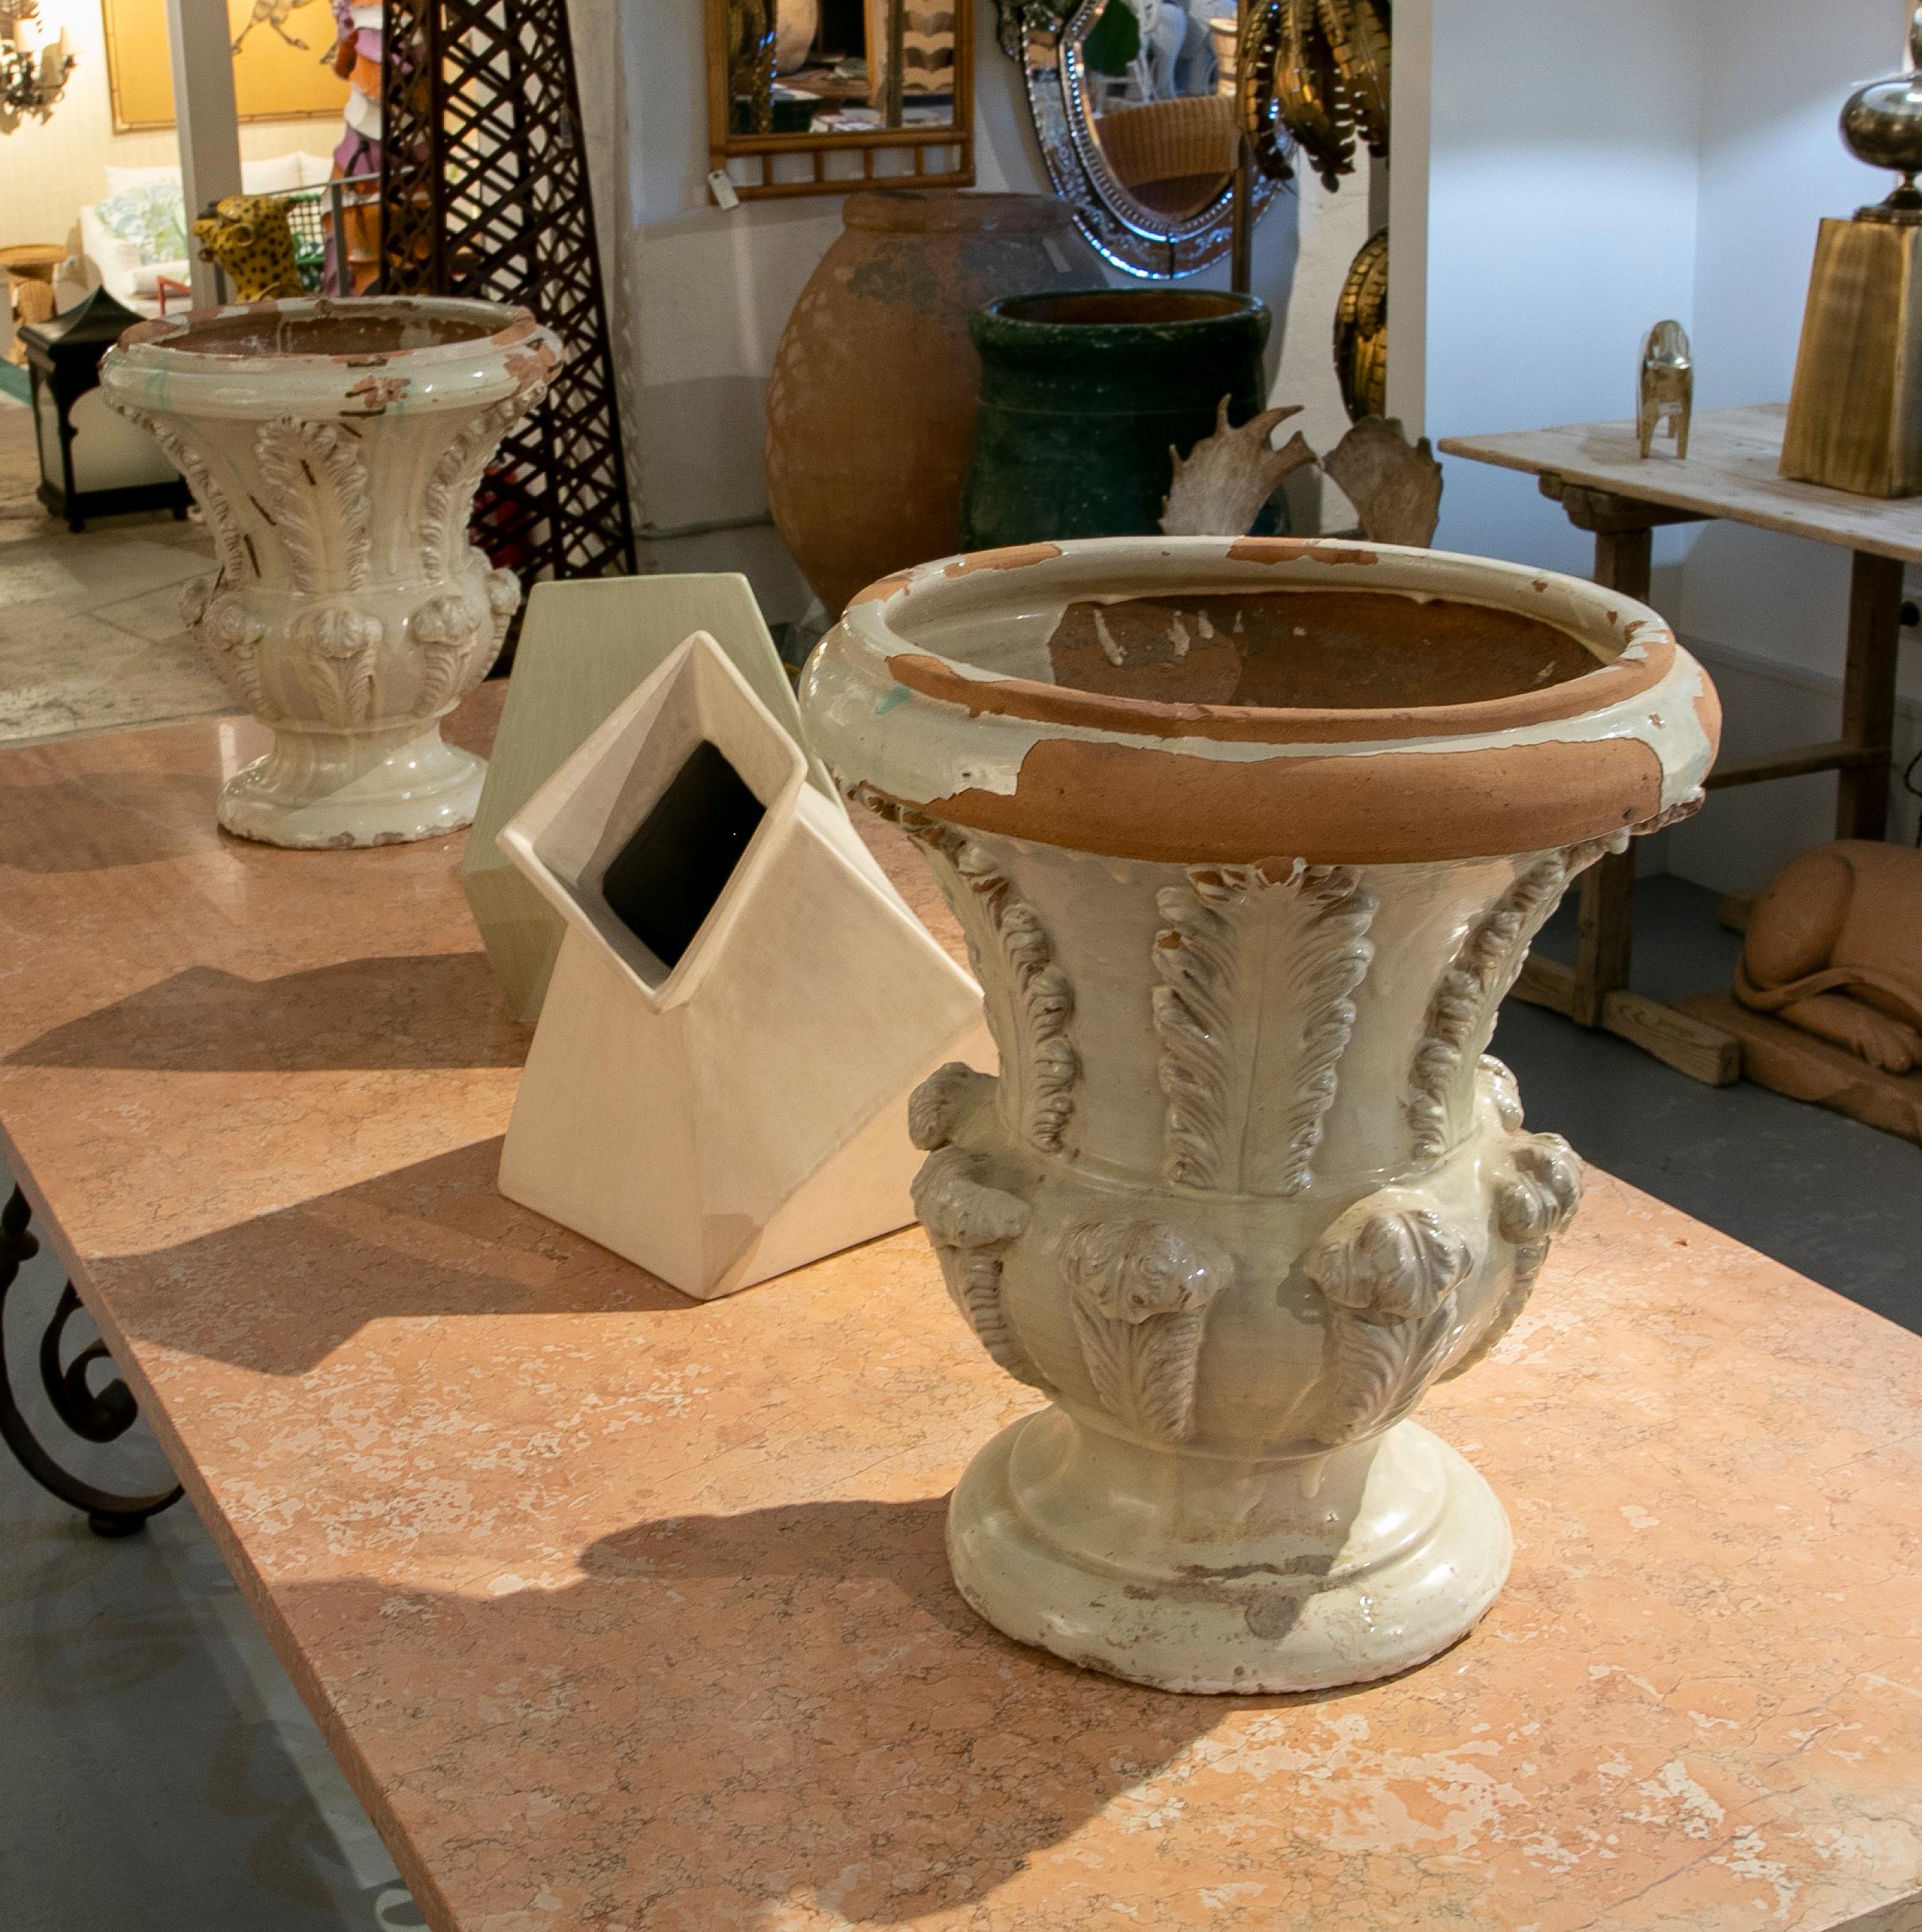 Pair of glazed ceramic vases from the xix century.